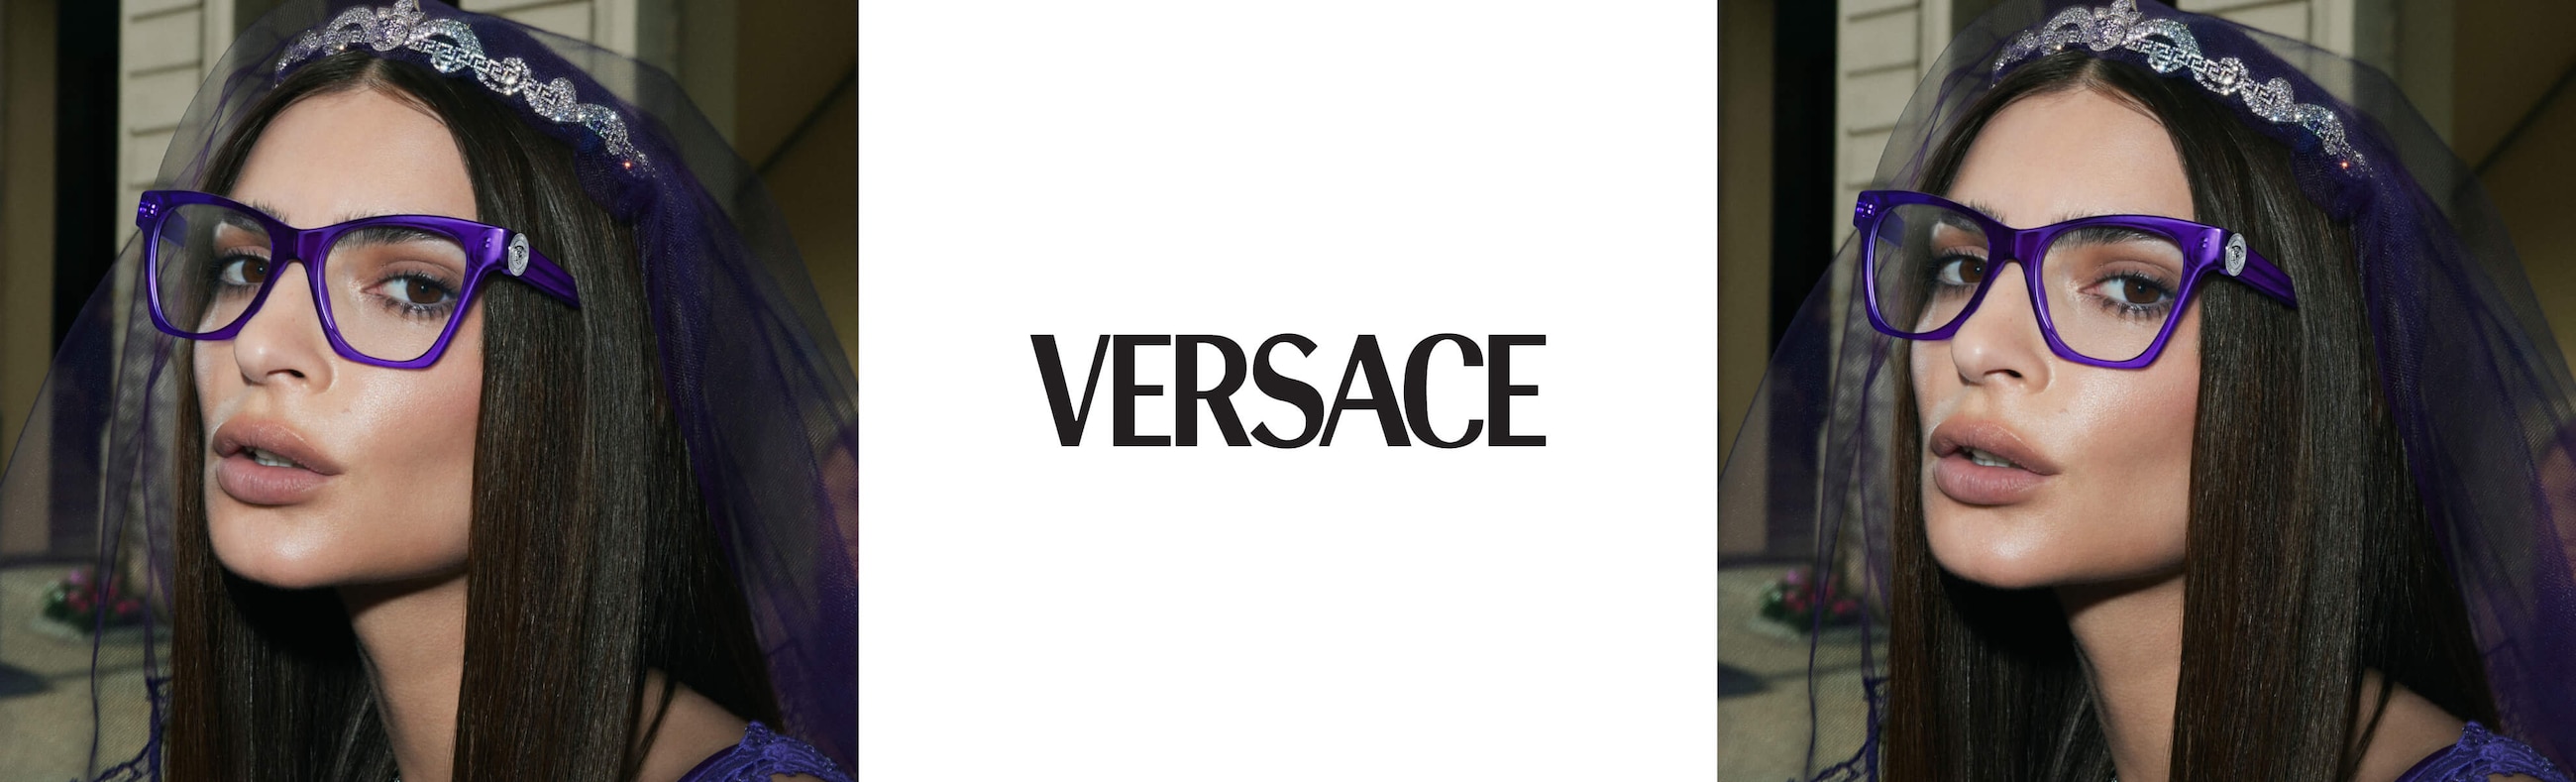 Versace image